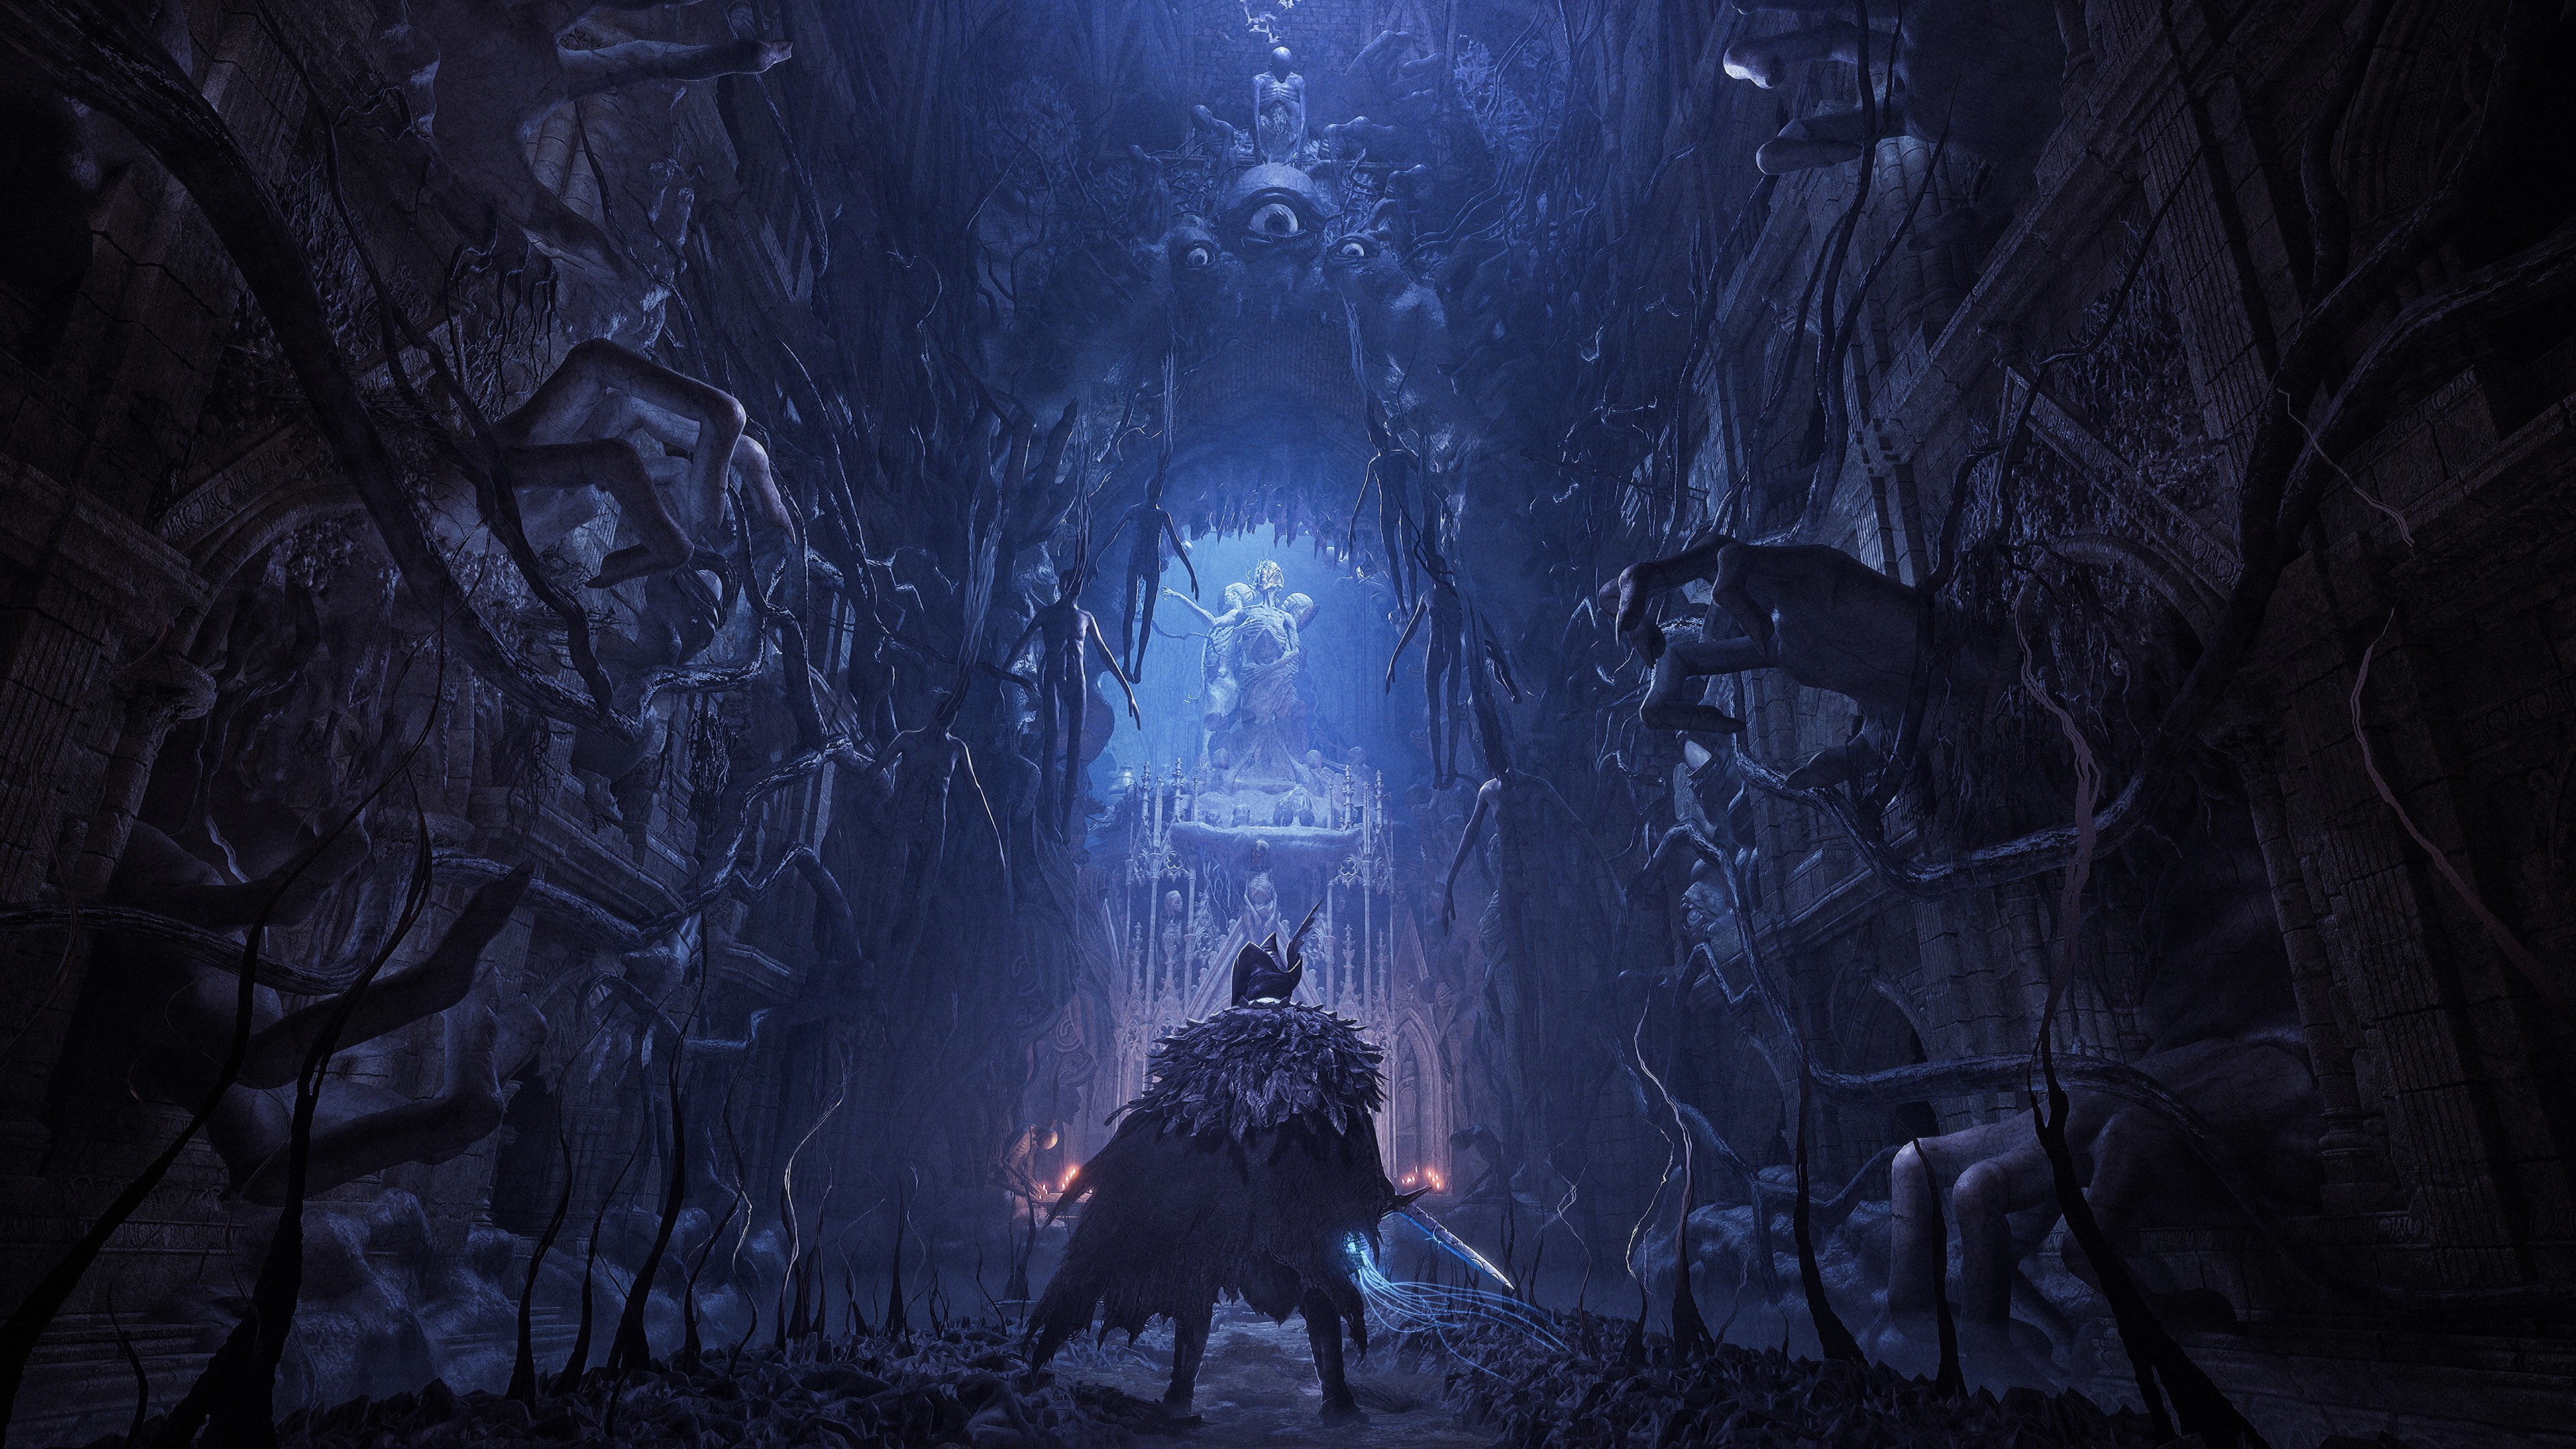 Lords Of The Fallen (2023) + Pre-Order Bonus DLC Steam CD Key